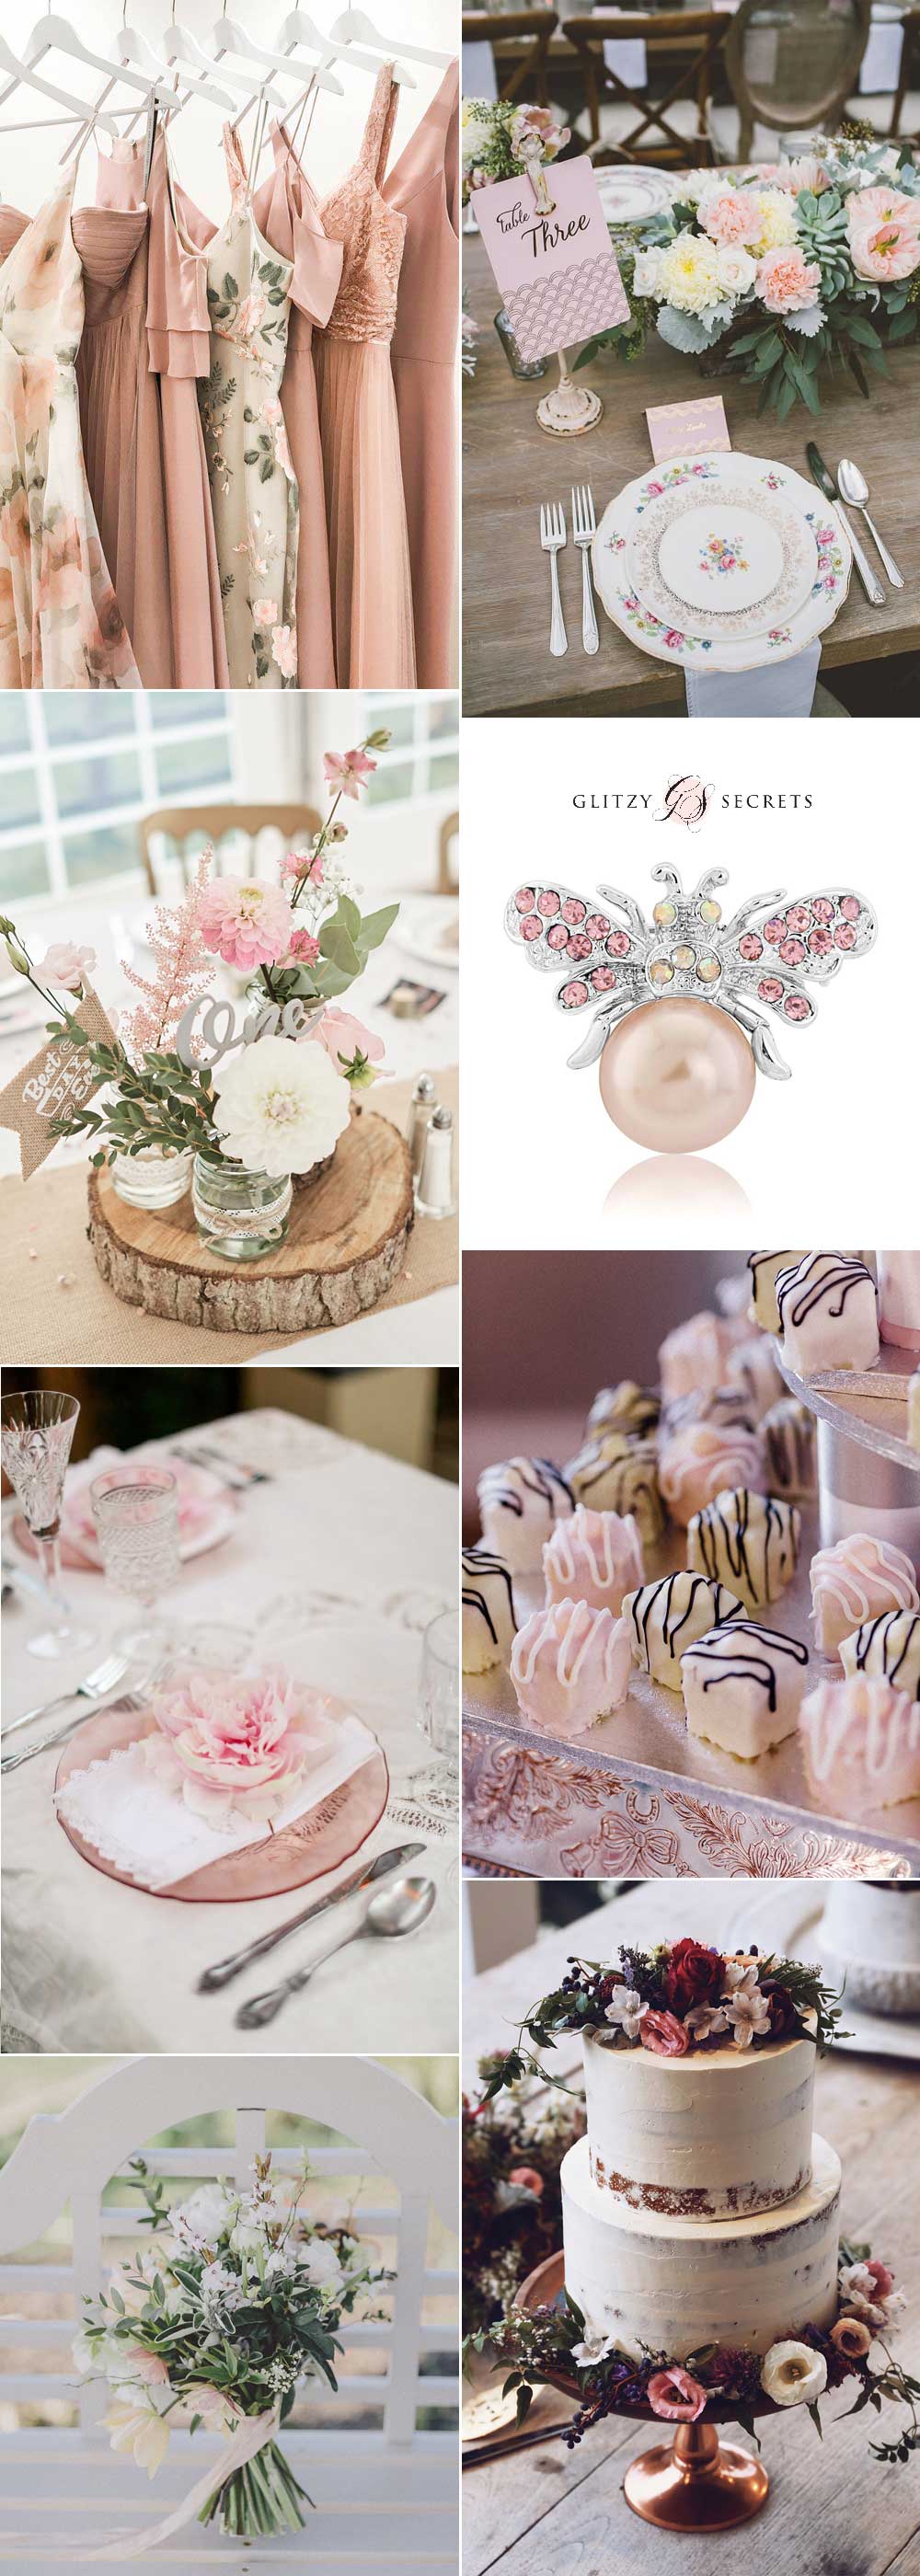 Pink and white vintage china wedding decor ideas